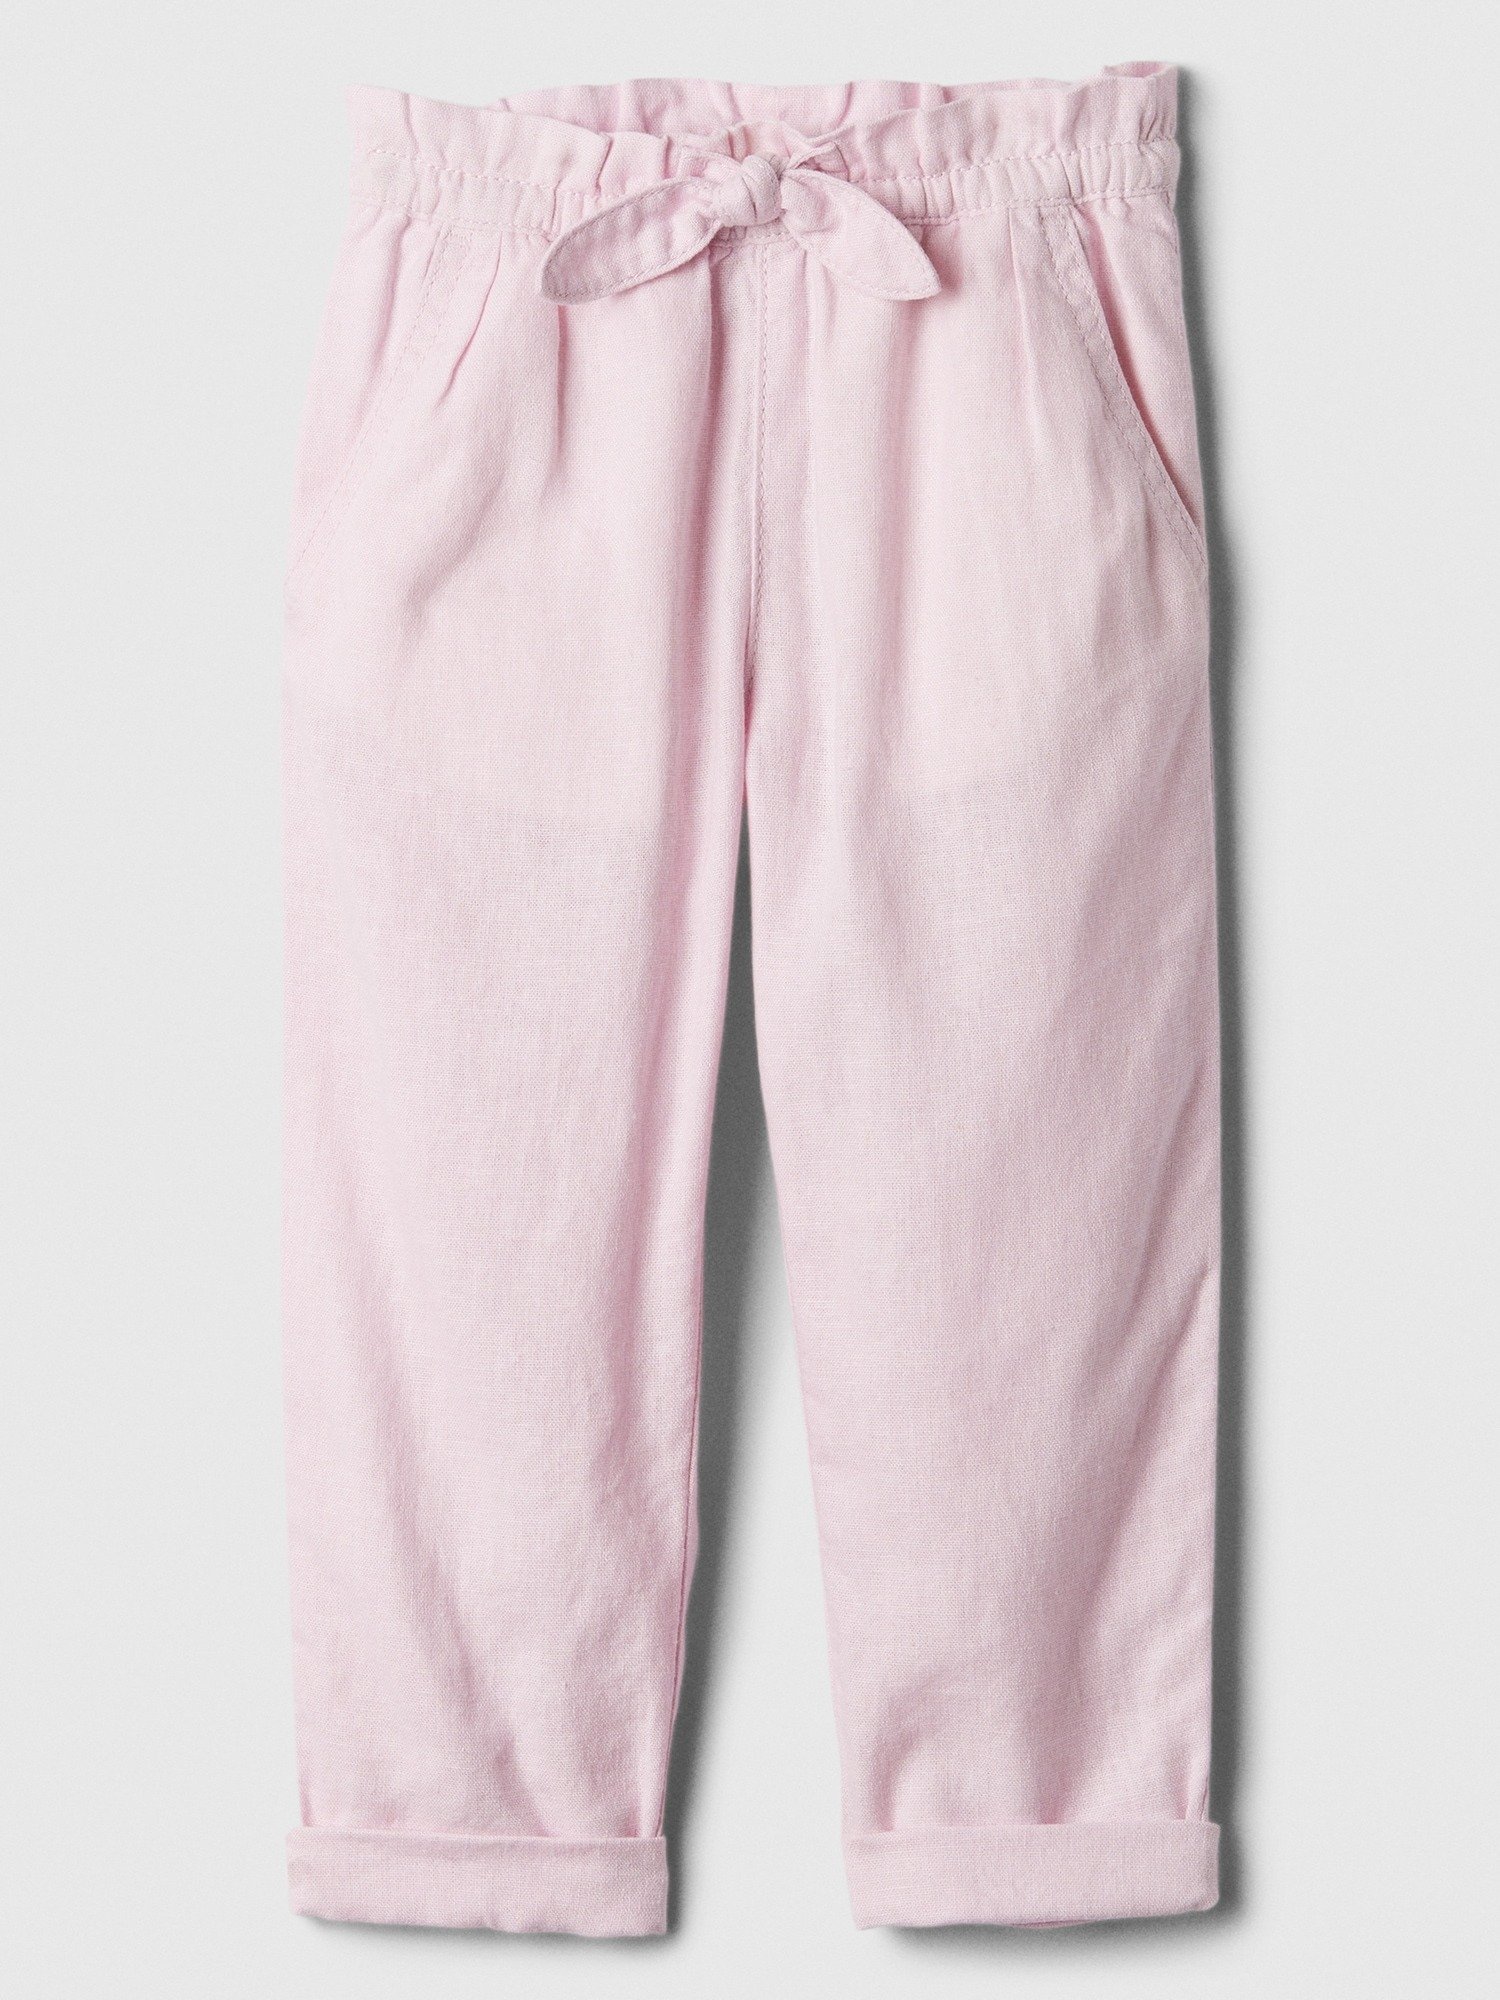 Keten Karışımlı Pull-On Pantolon product image